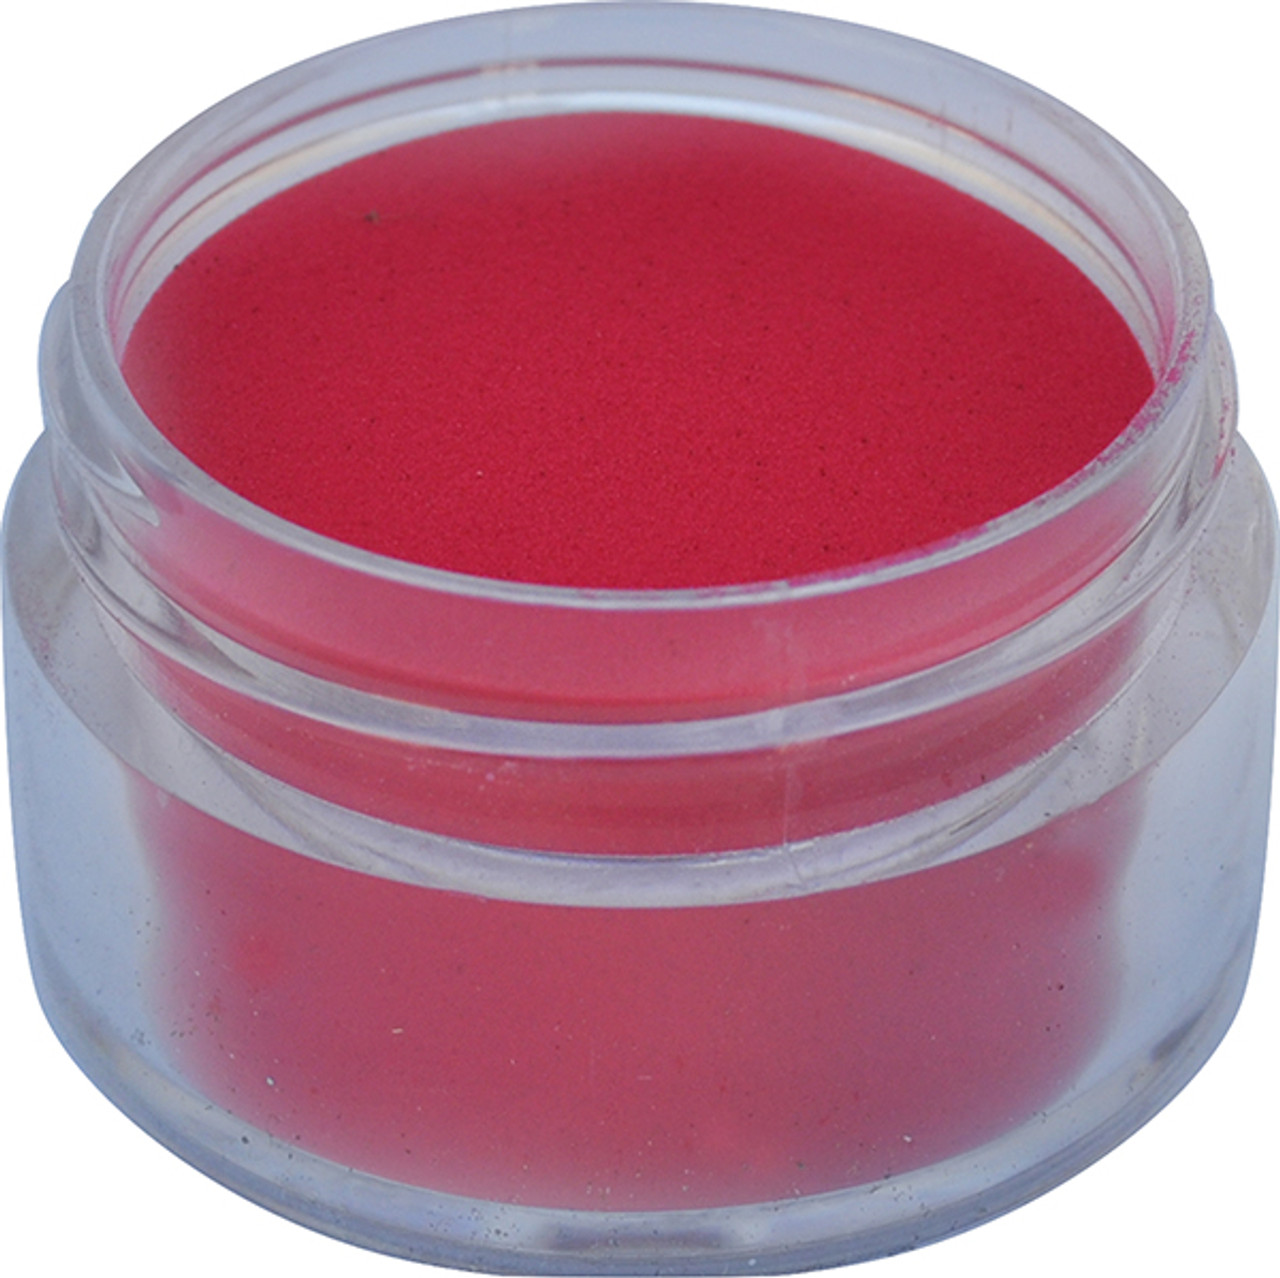 U2 PURE Color Powder - Red - 1/2 oz